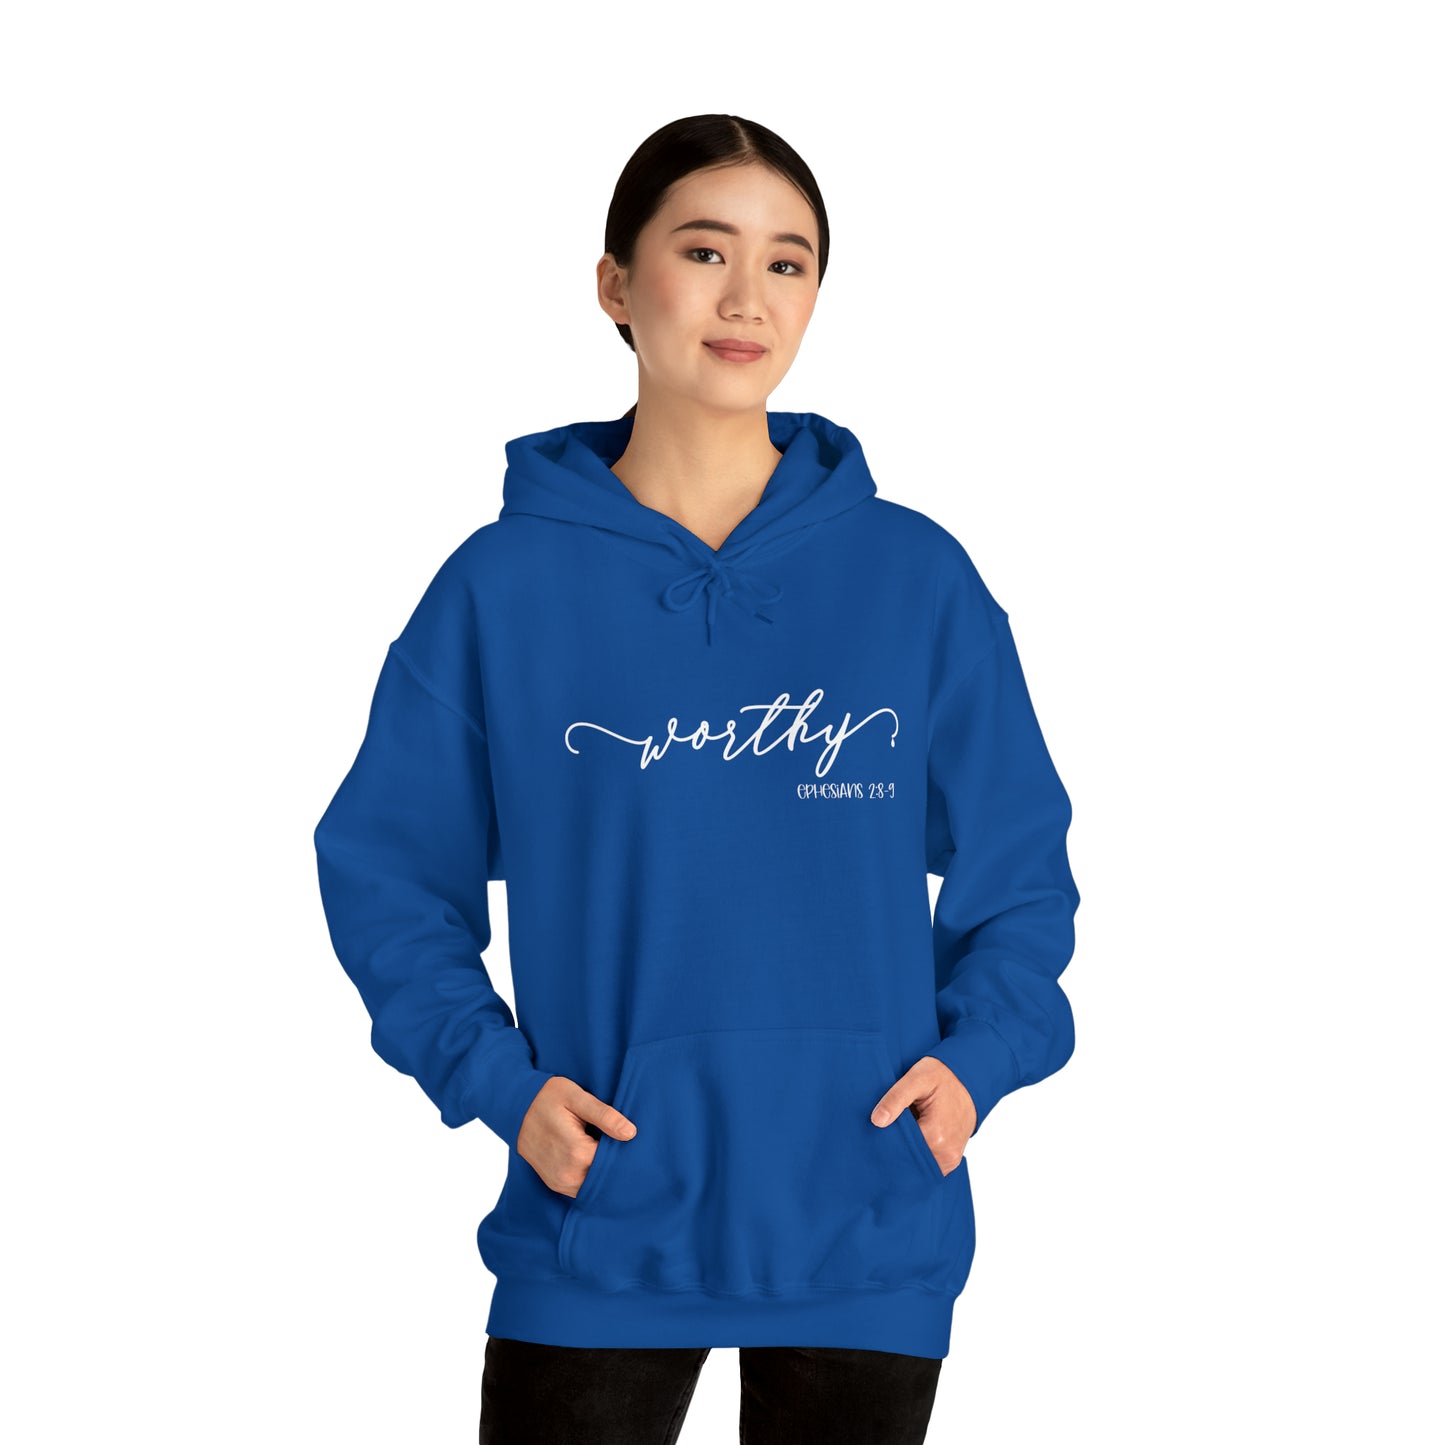 Worthy Hooded Sweatshirt | Christian Apparel